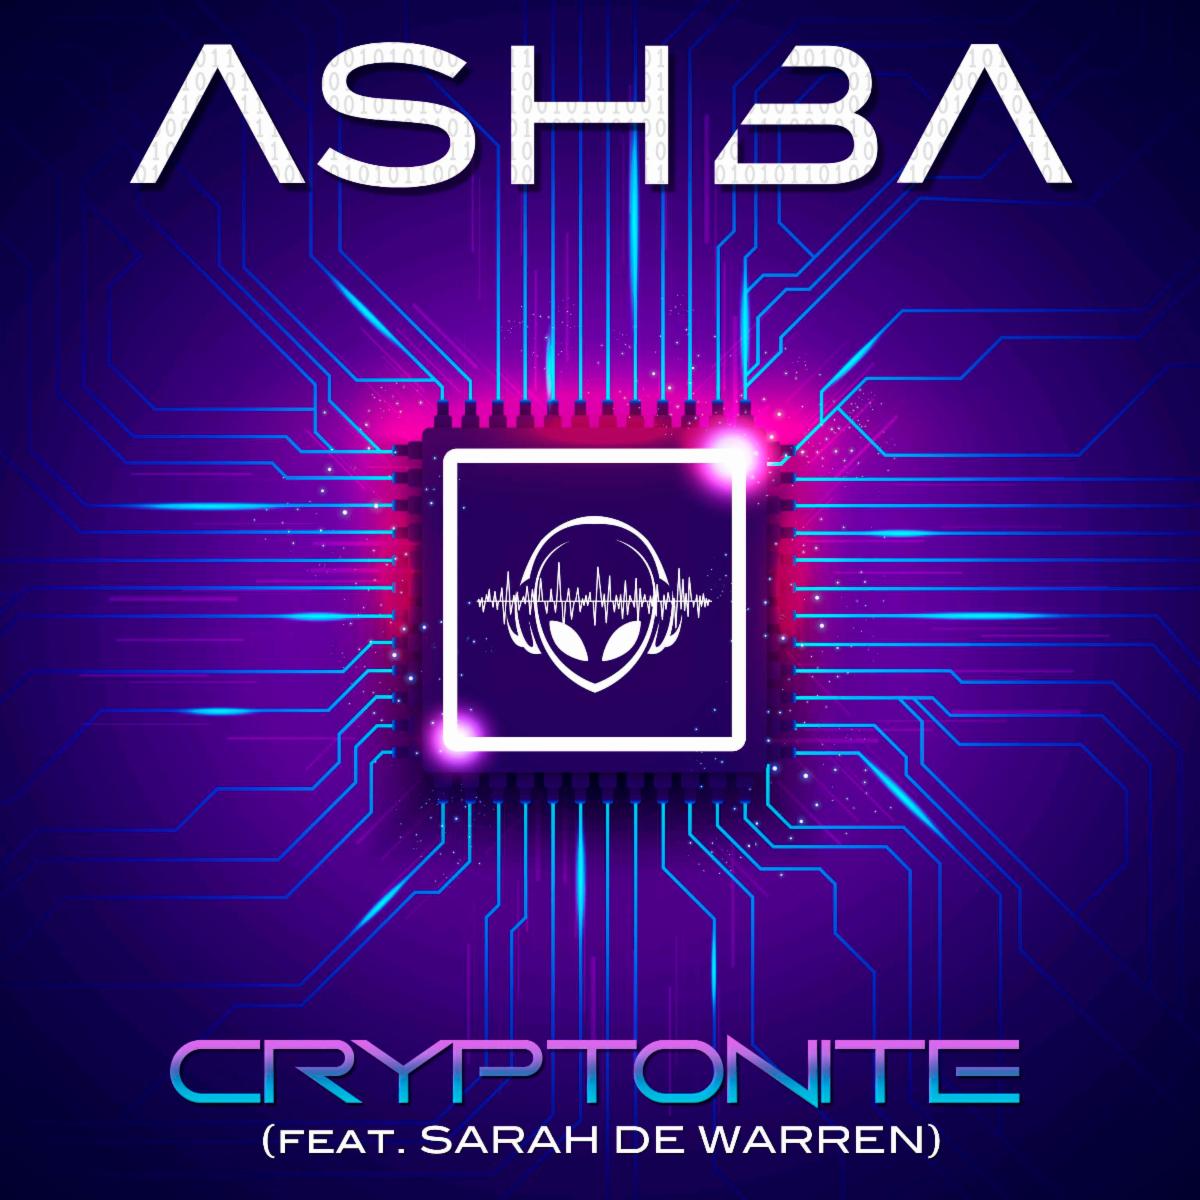 ASHBA shares latest single "Cryptonite" ft. Sarah de Warren; a metaverse tragic love story